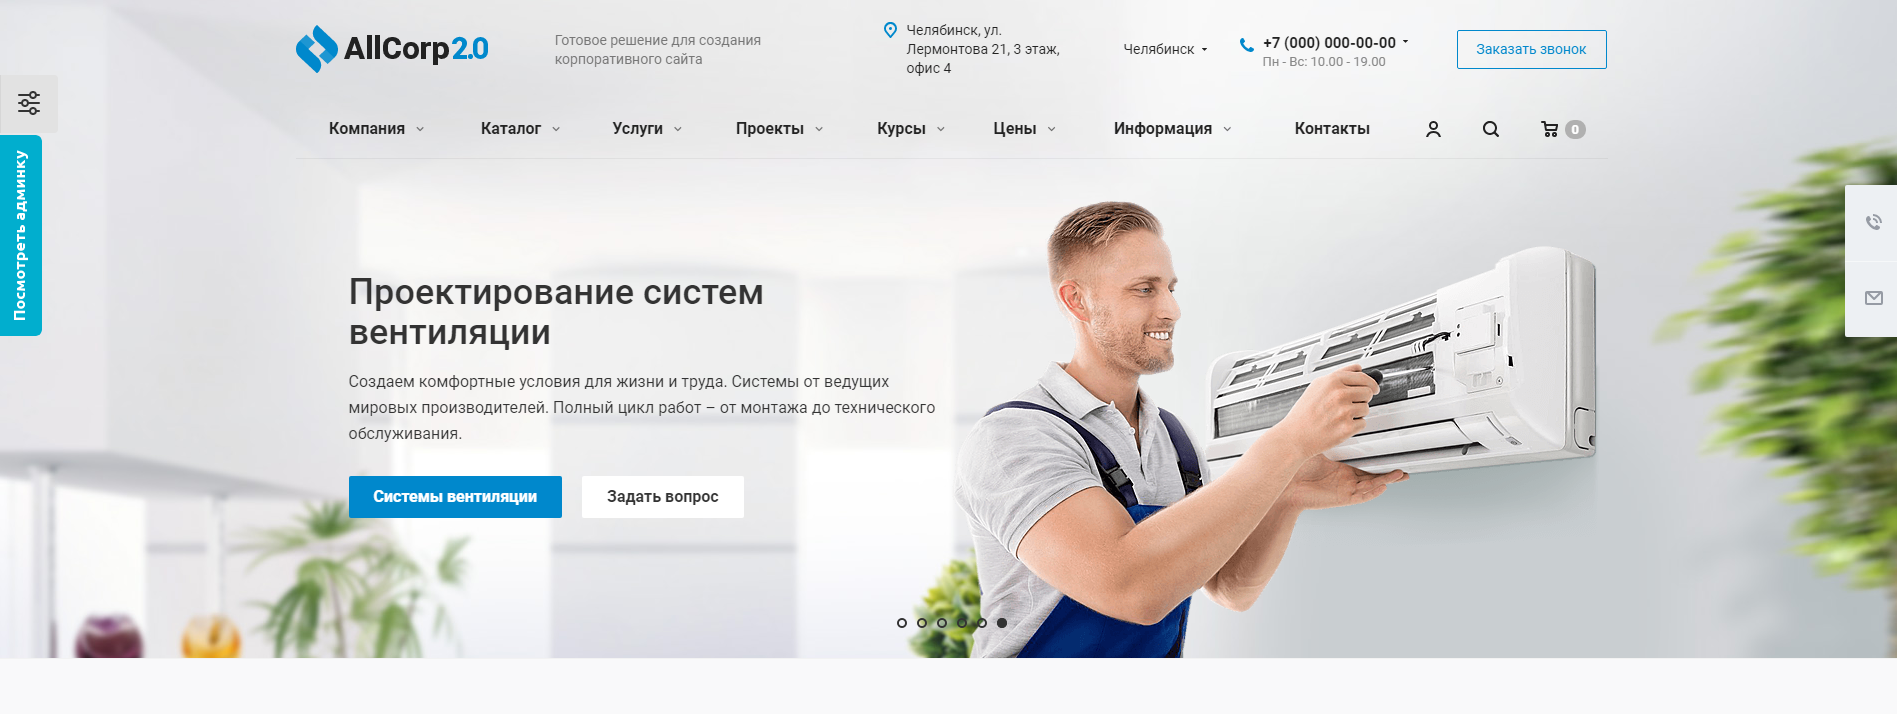 Создание корпоративного сайта москва 6650